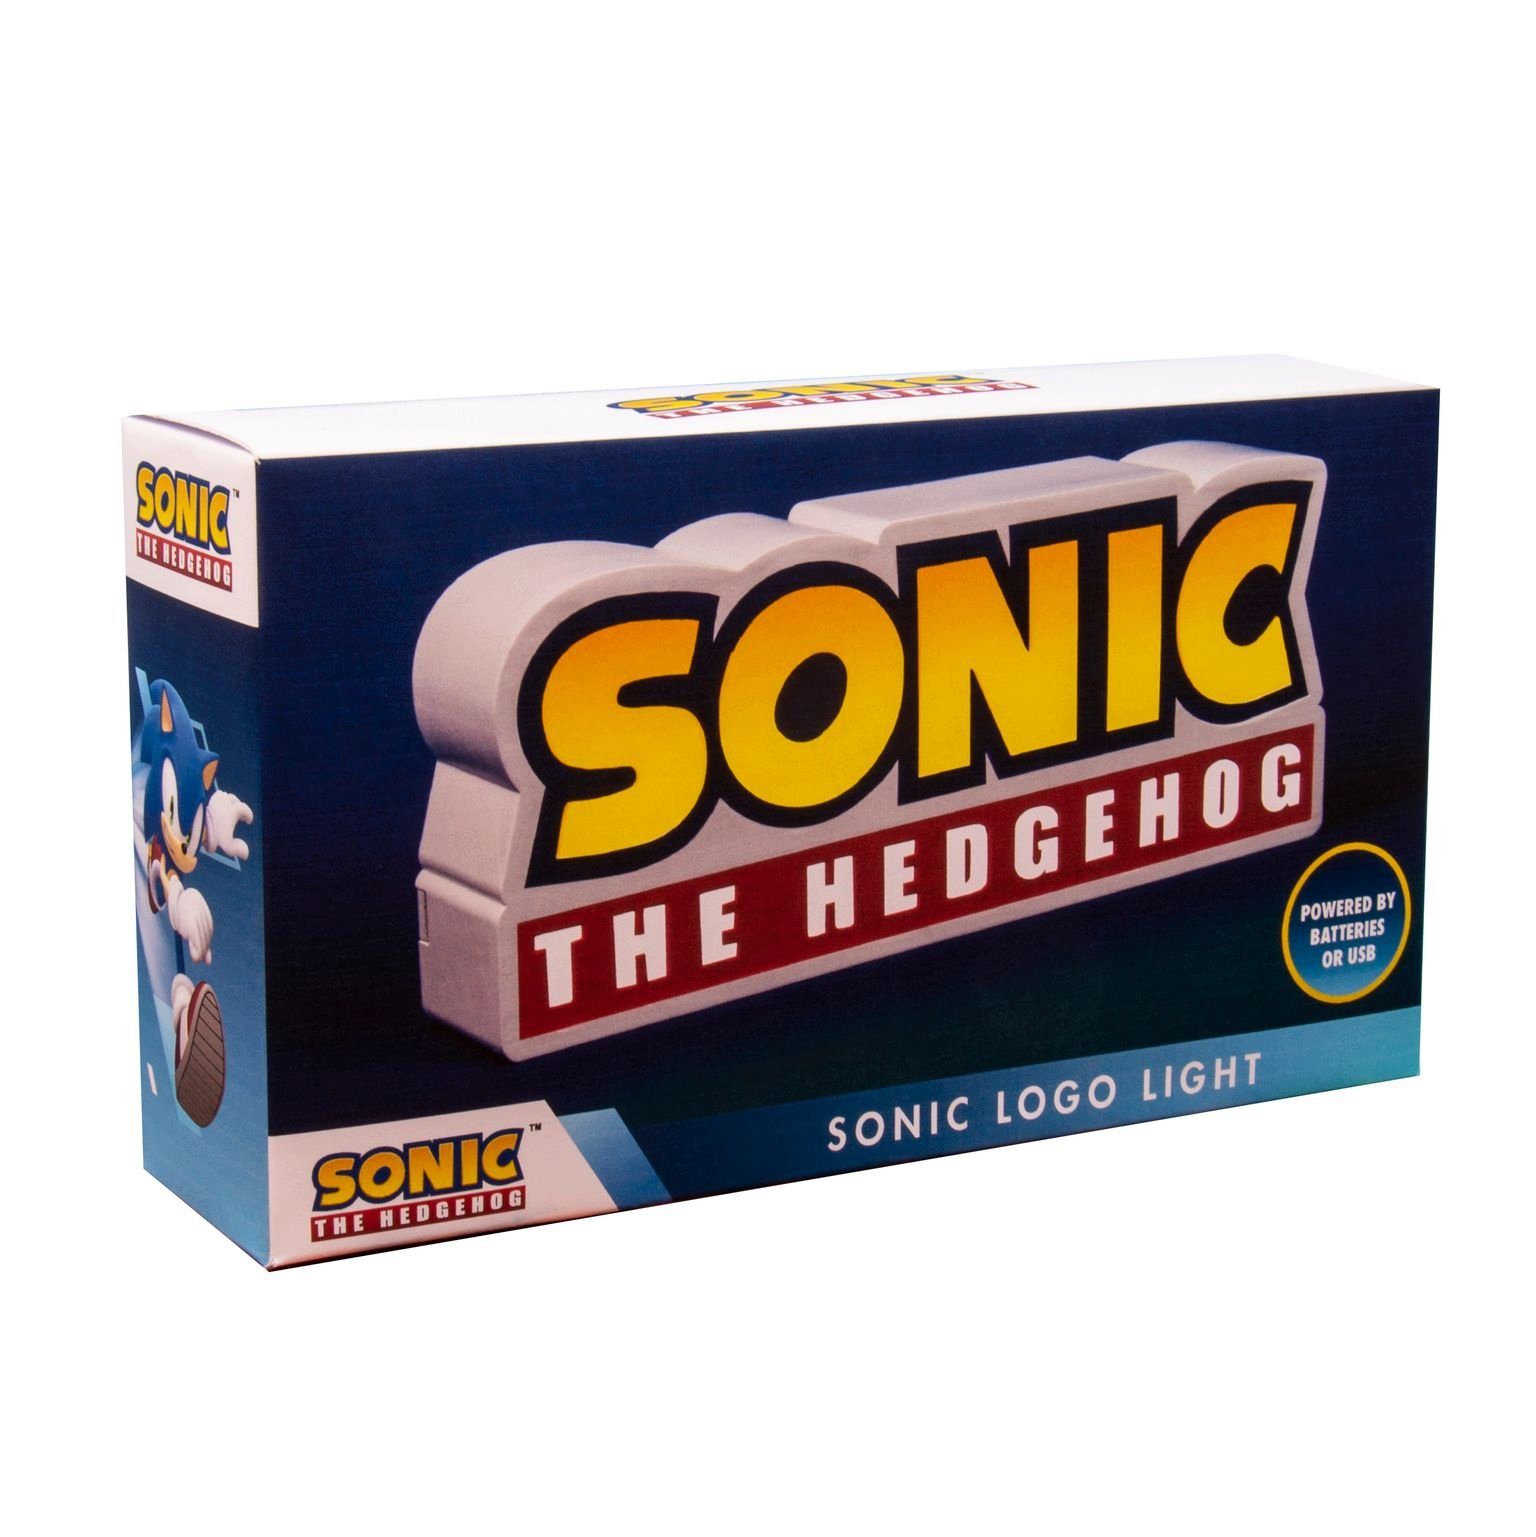 Fizz creations Nachtlicht Sonic The integriert, Hedgehog-Merchandise Logo-Licht, Hedgehog The Sonic Lizenziertes Offiziell fest LED